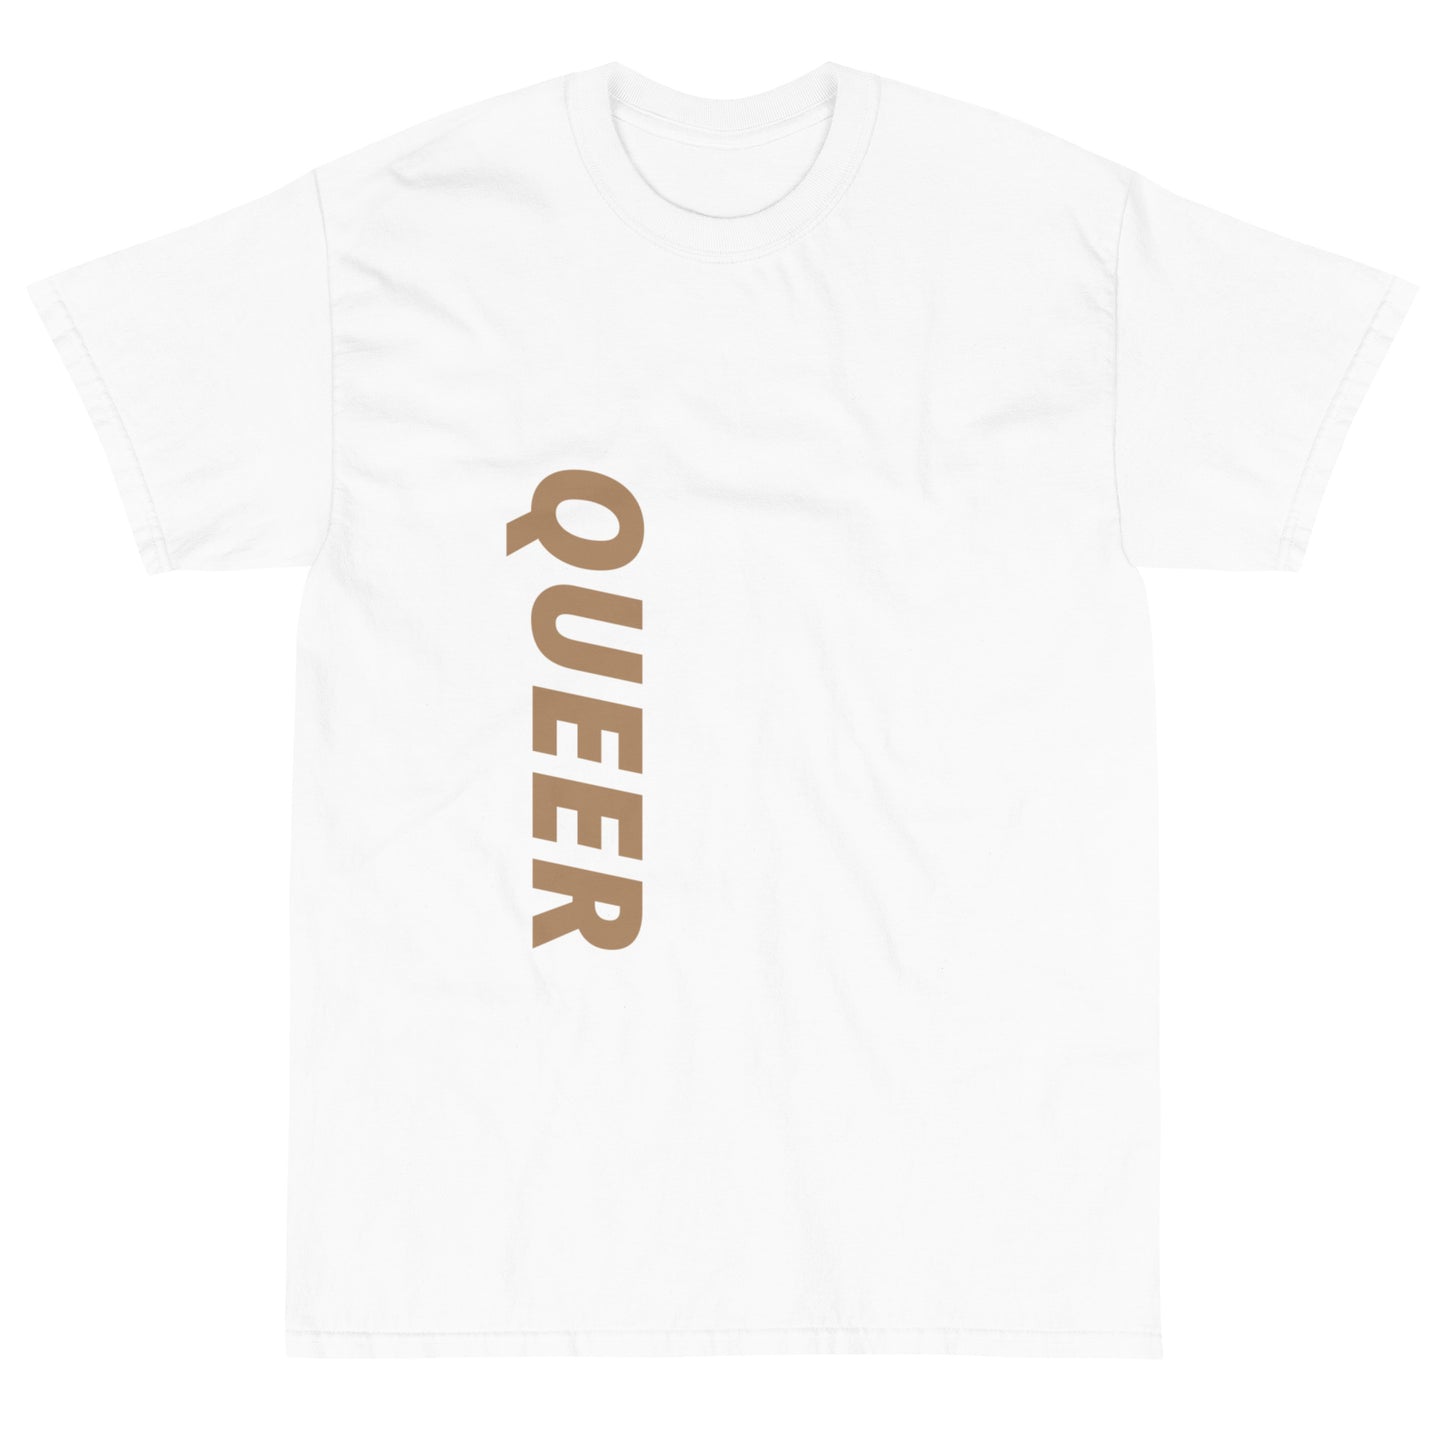 "Queer" Short Sleeve T-Shirt